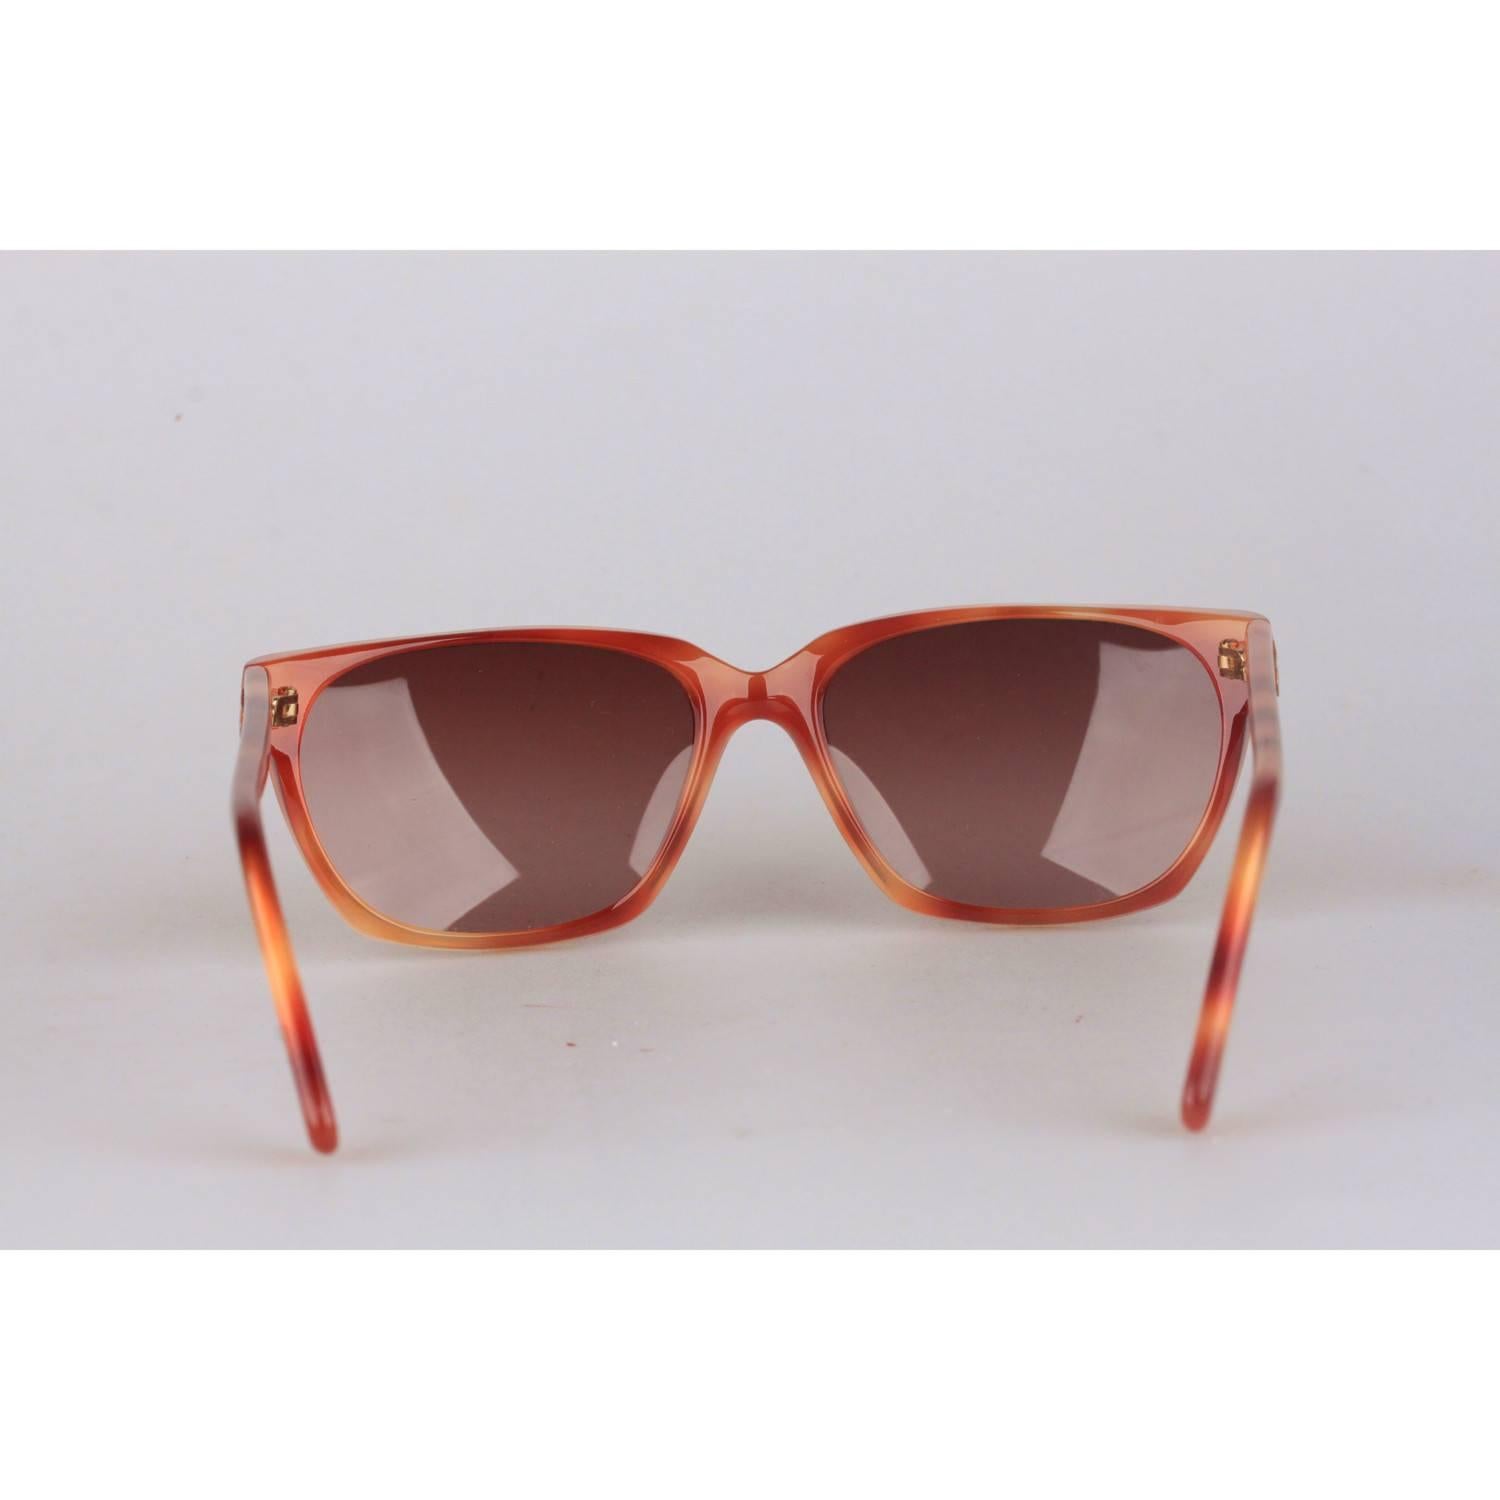 Brown YVES SAINT LAURENT Vintage Sunglasses Phocos 56-16mm New Old Stock